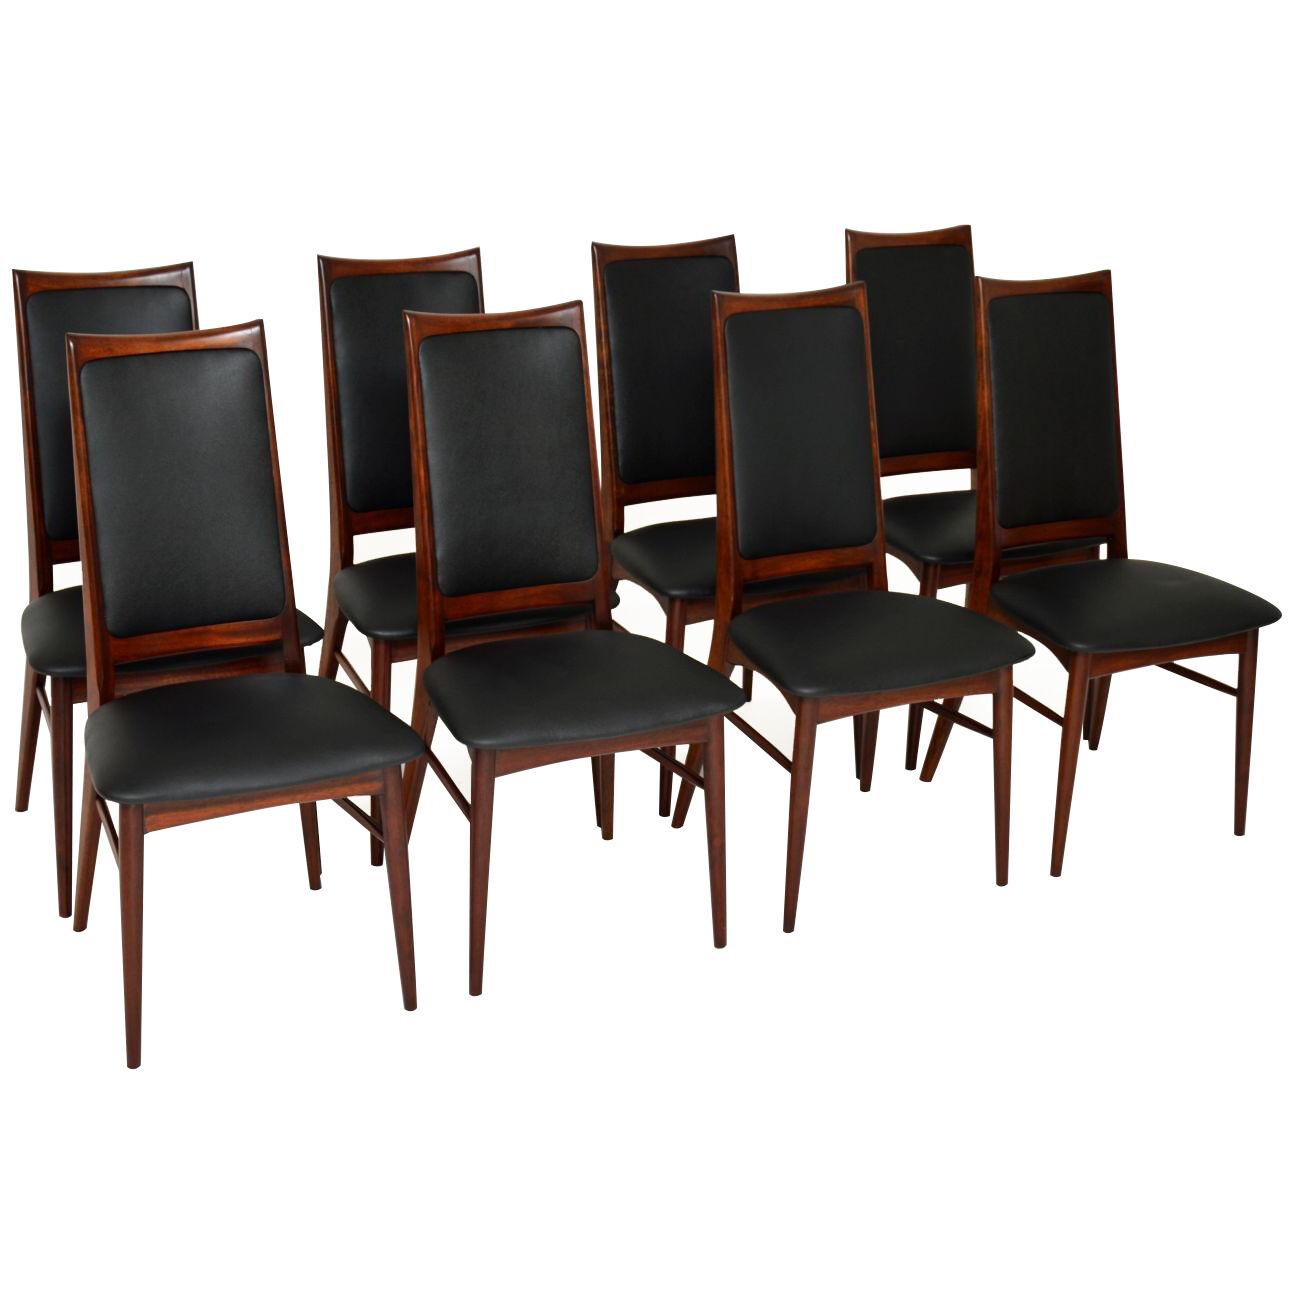 Set of 8 Vintage Danish Dining Chairs by Niels Koefoed